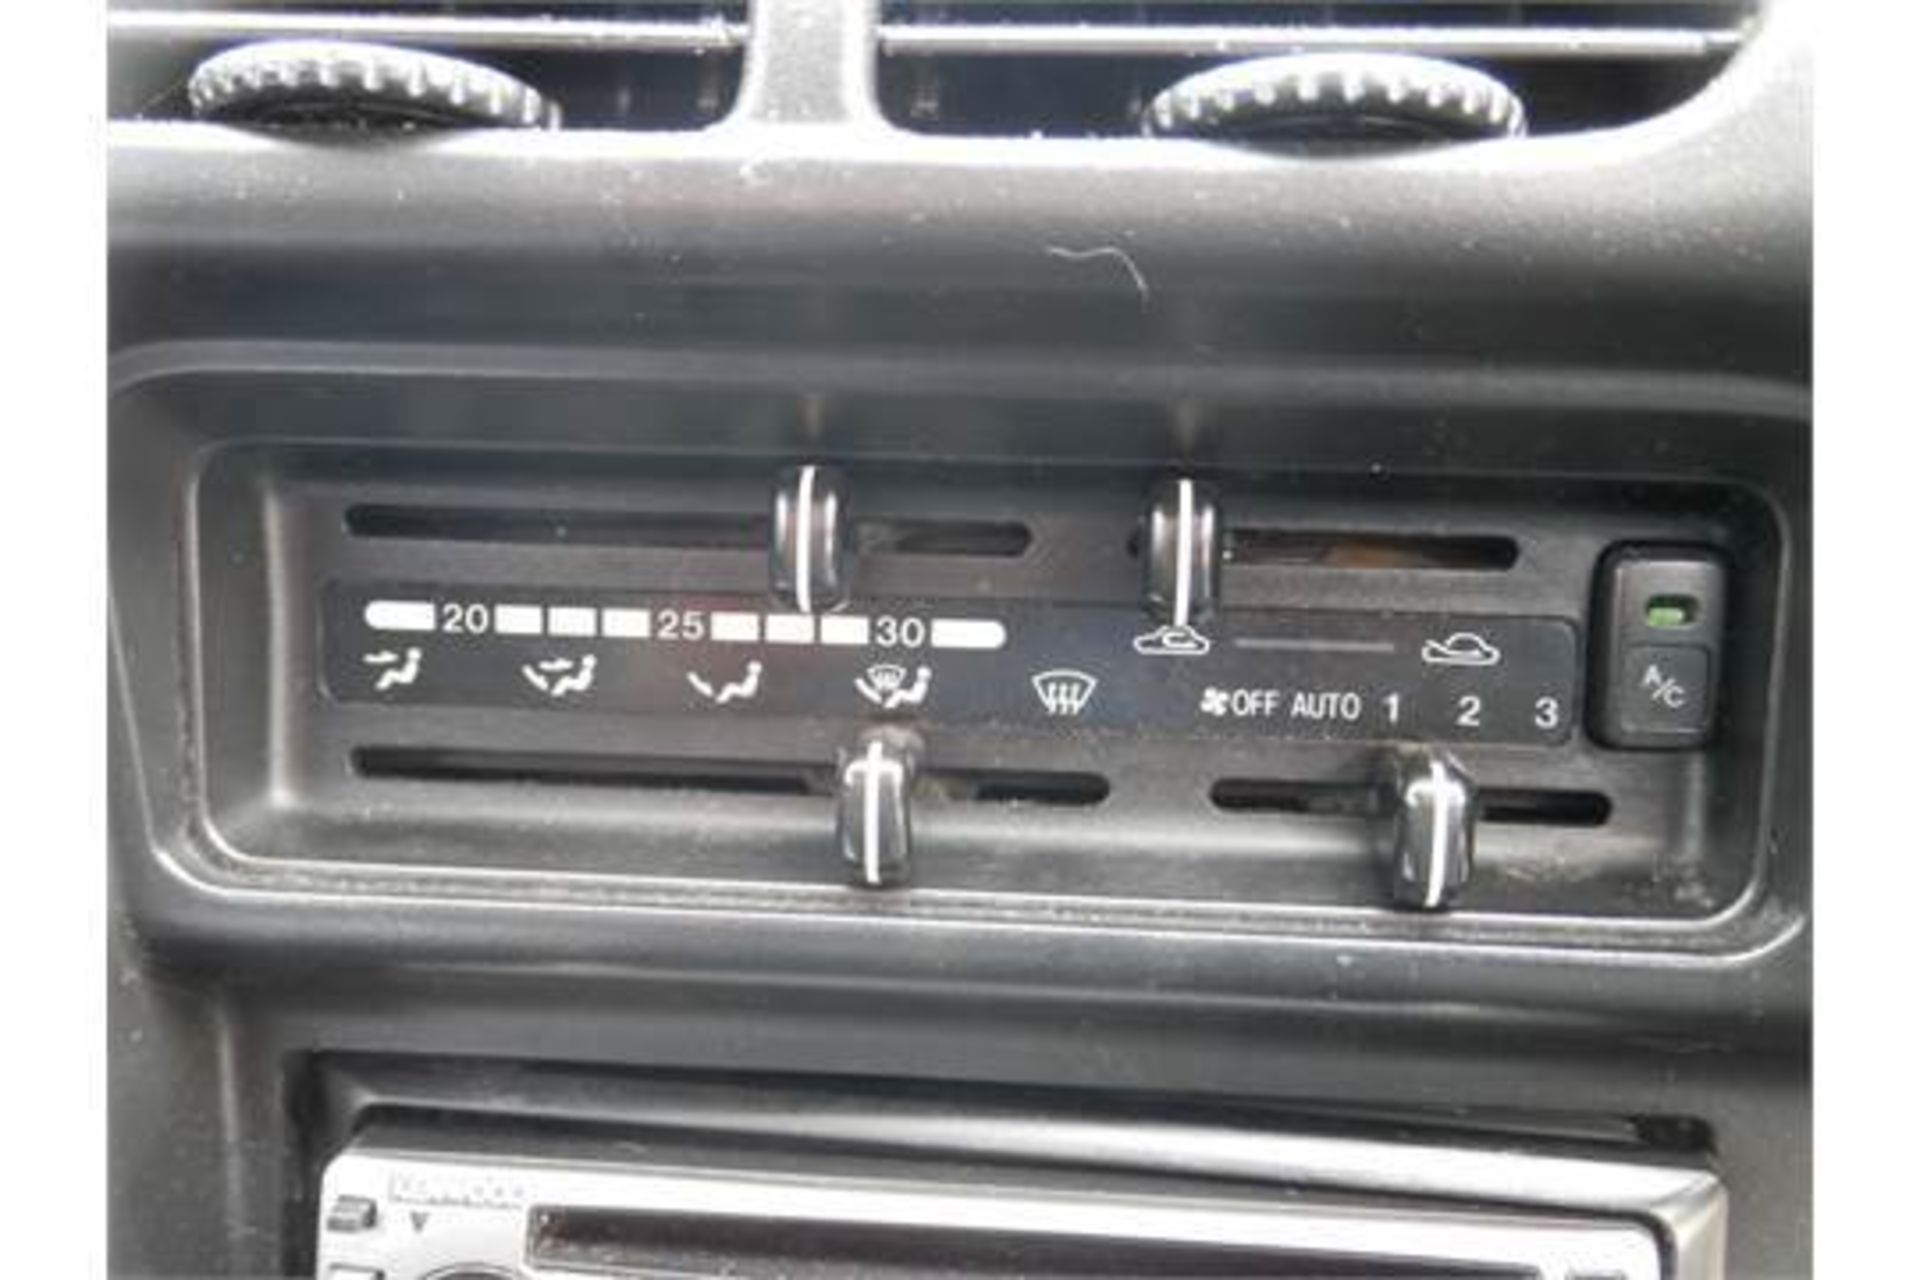 2003 REG 1995 MAZDA MX-3 1.5 AUTO 3 DOOR COUPE IN BLACK, LOG BOOK, MOT JAN, 77K MILES, DRIVES GREAT - Image 19 of 33